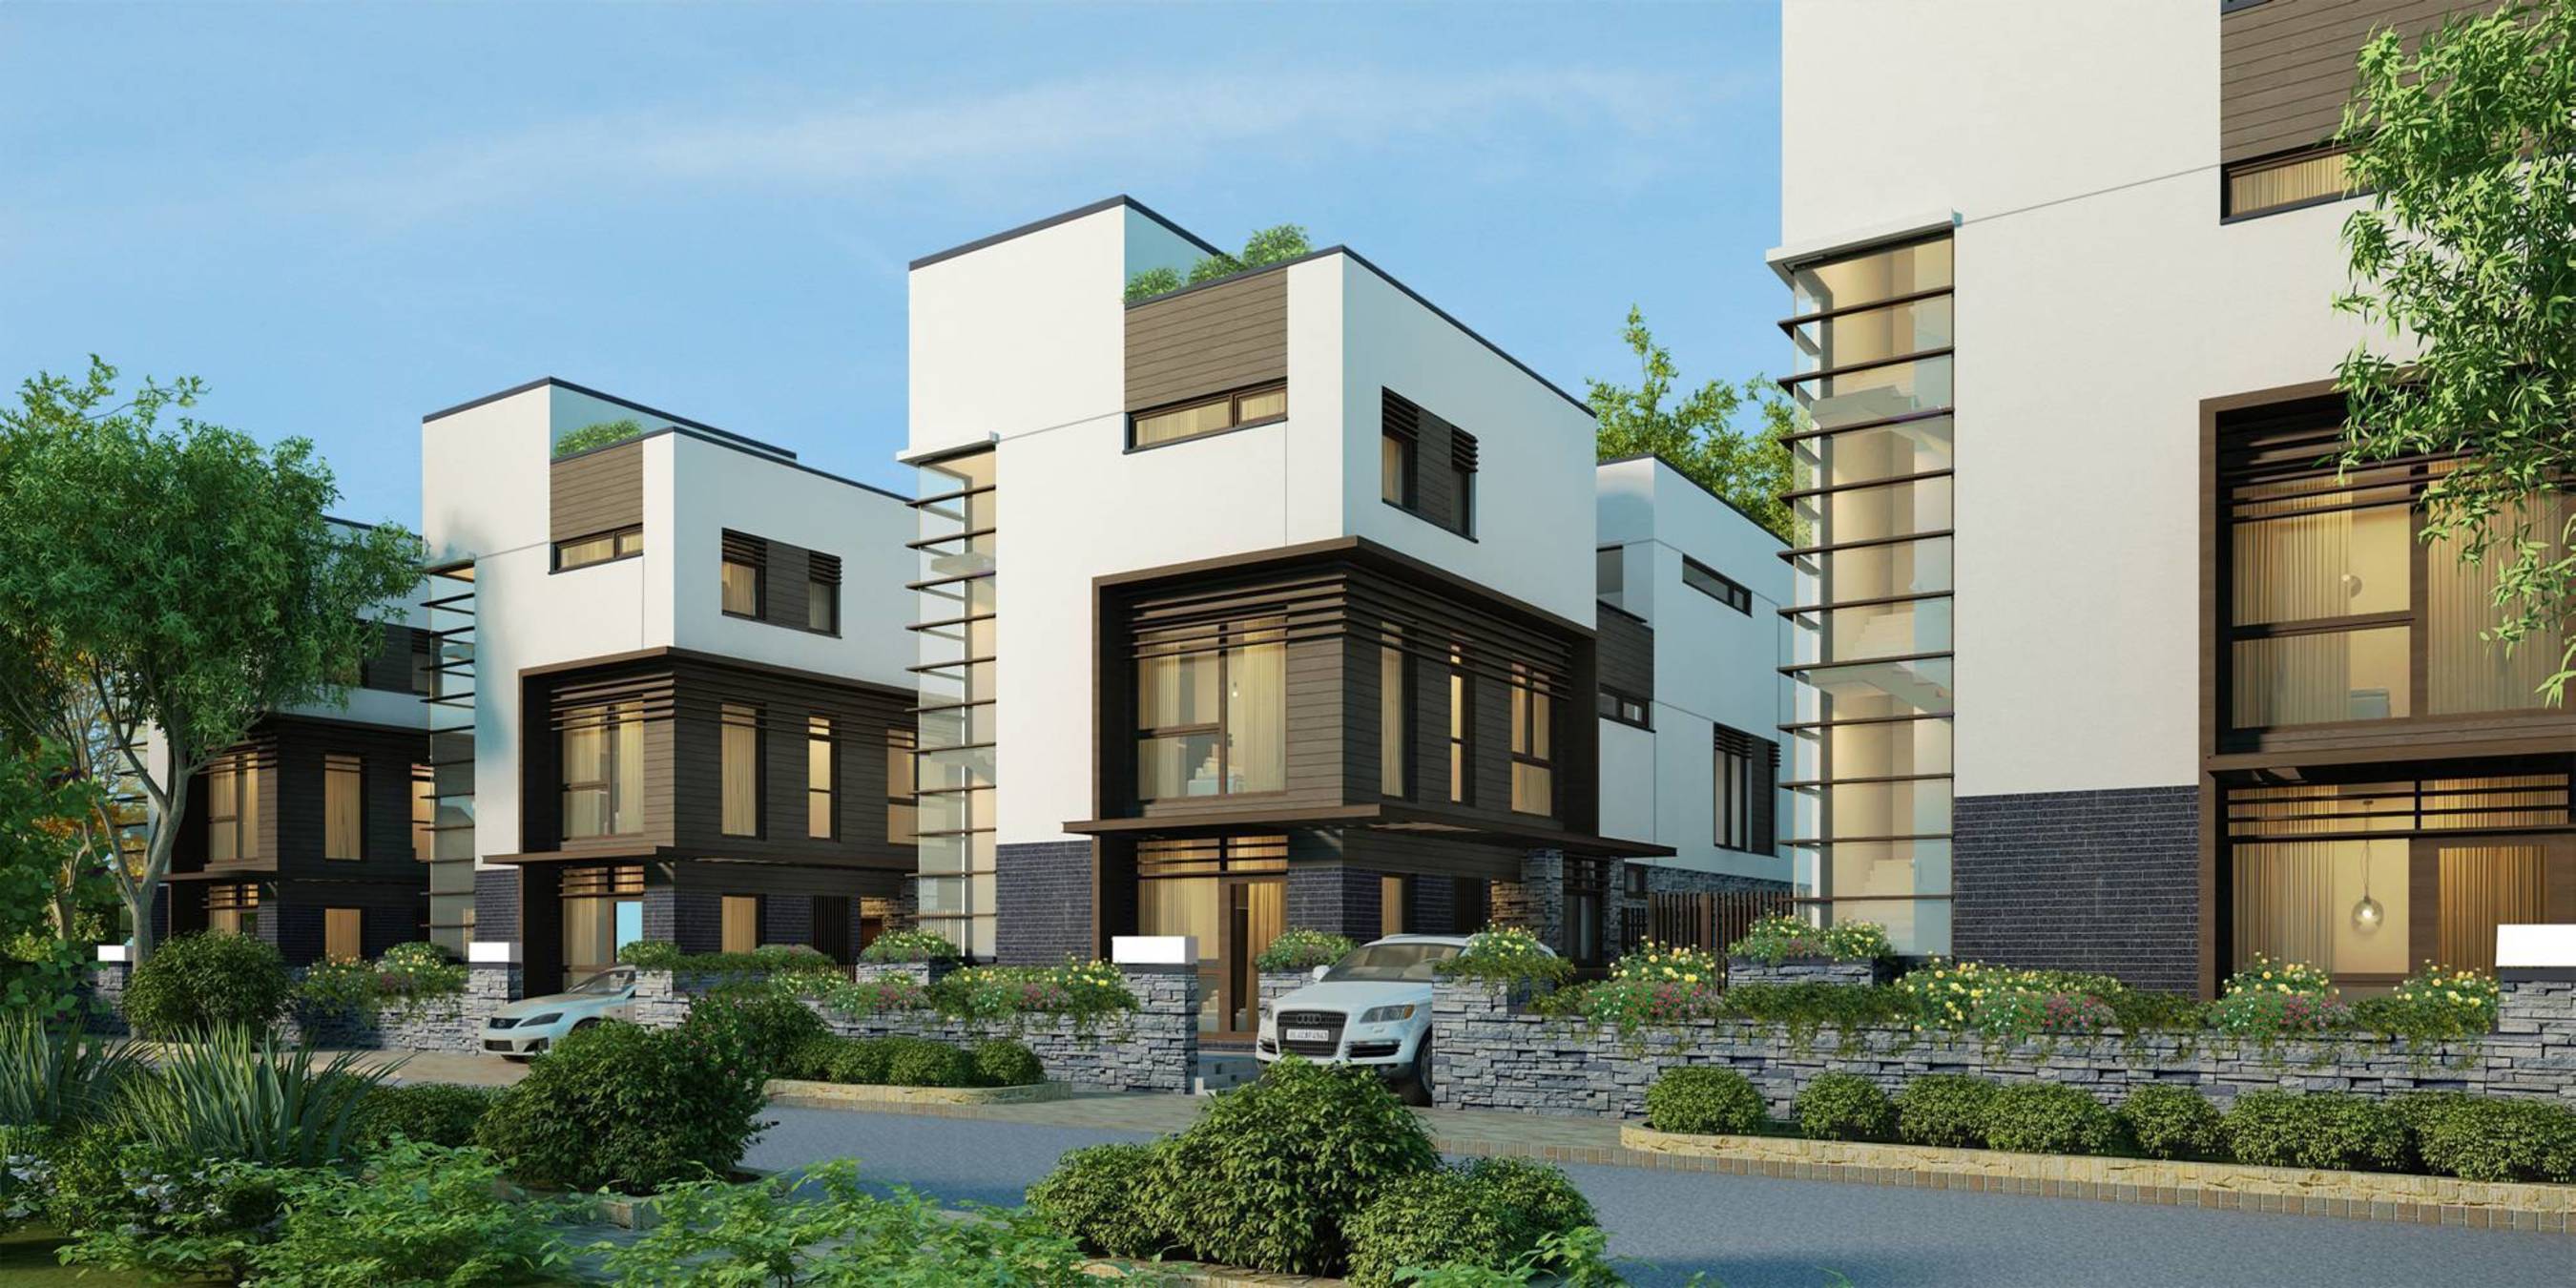 Arabella - Exclusive Villa Project by Tata Housing in NCR (PRNewsFoto/Tata Housing Development Co Ltd_)